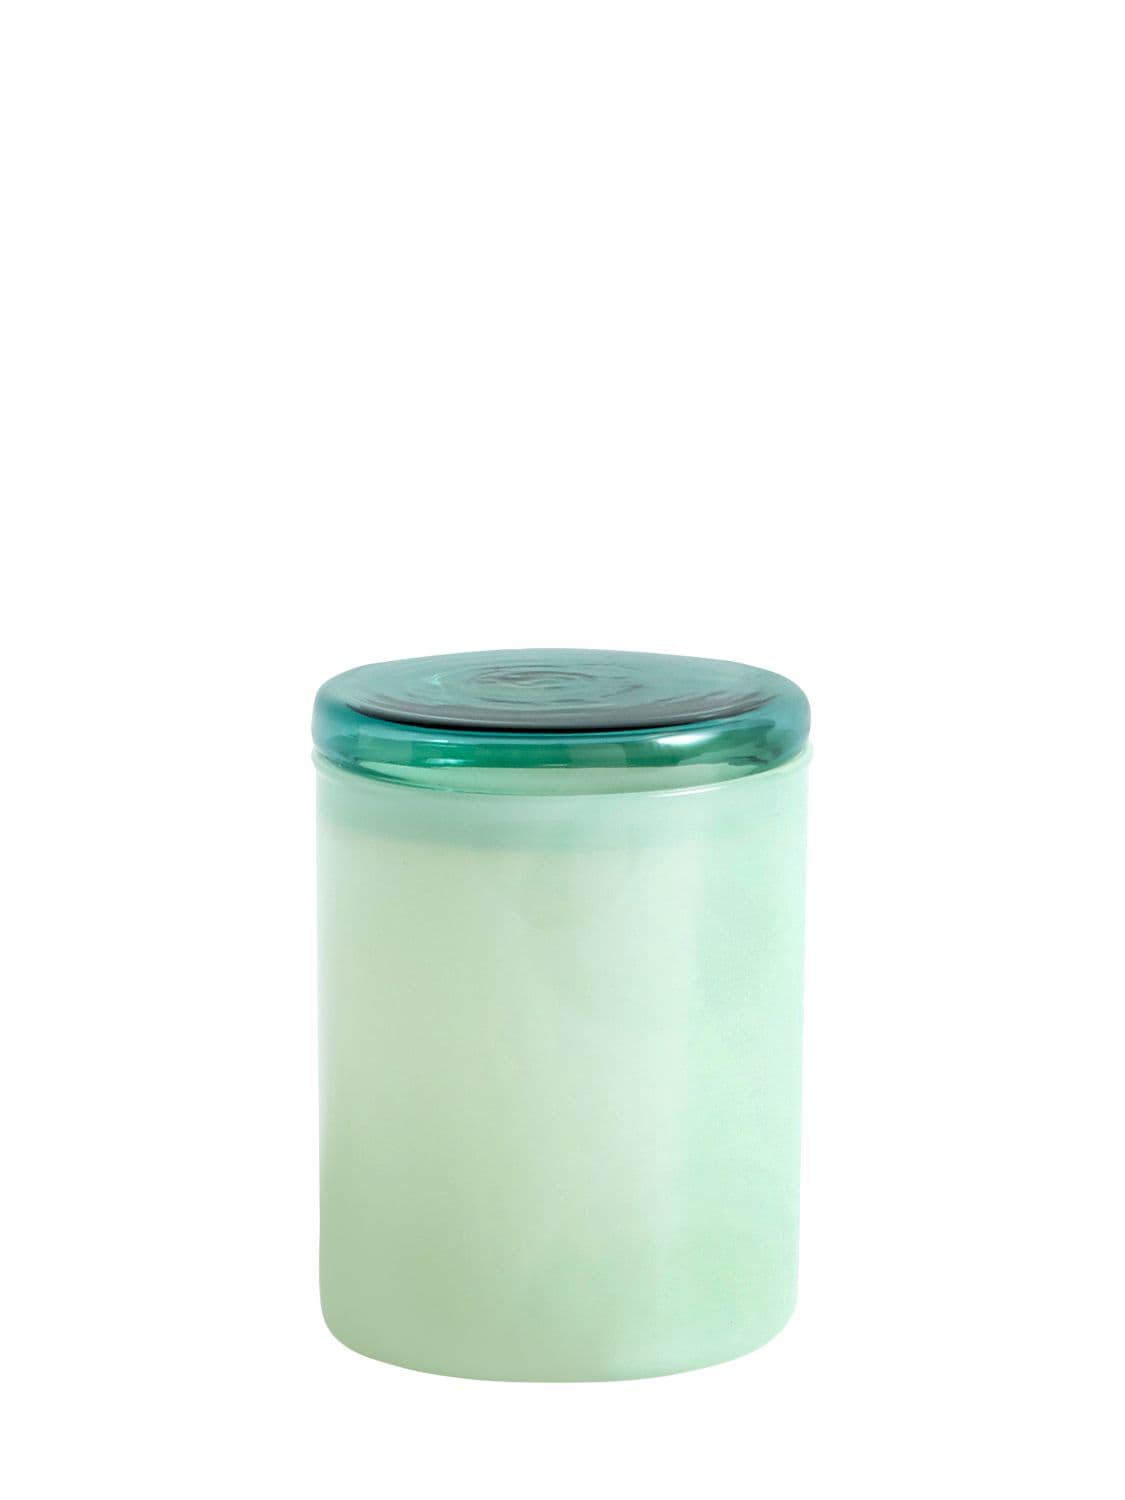 Image of Small Glass Jar